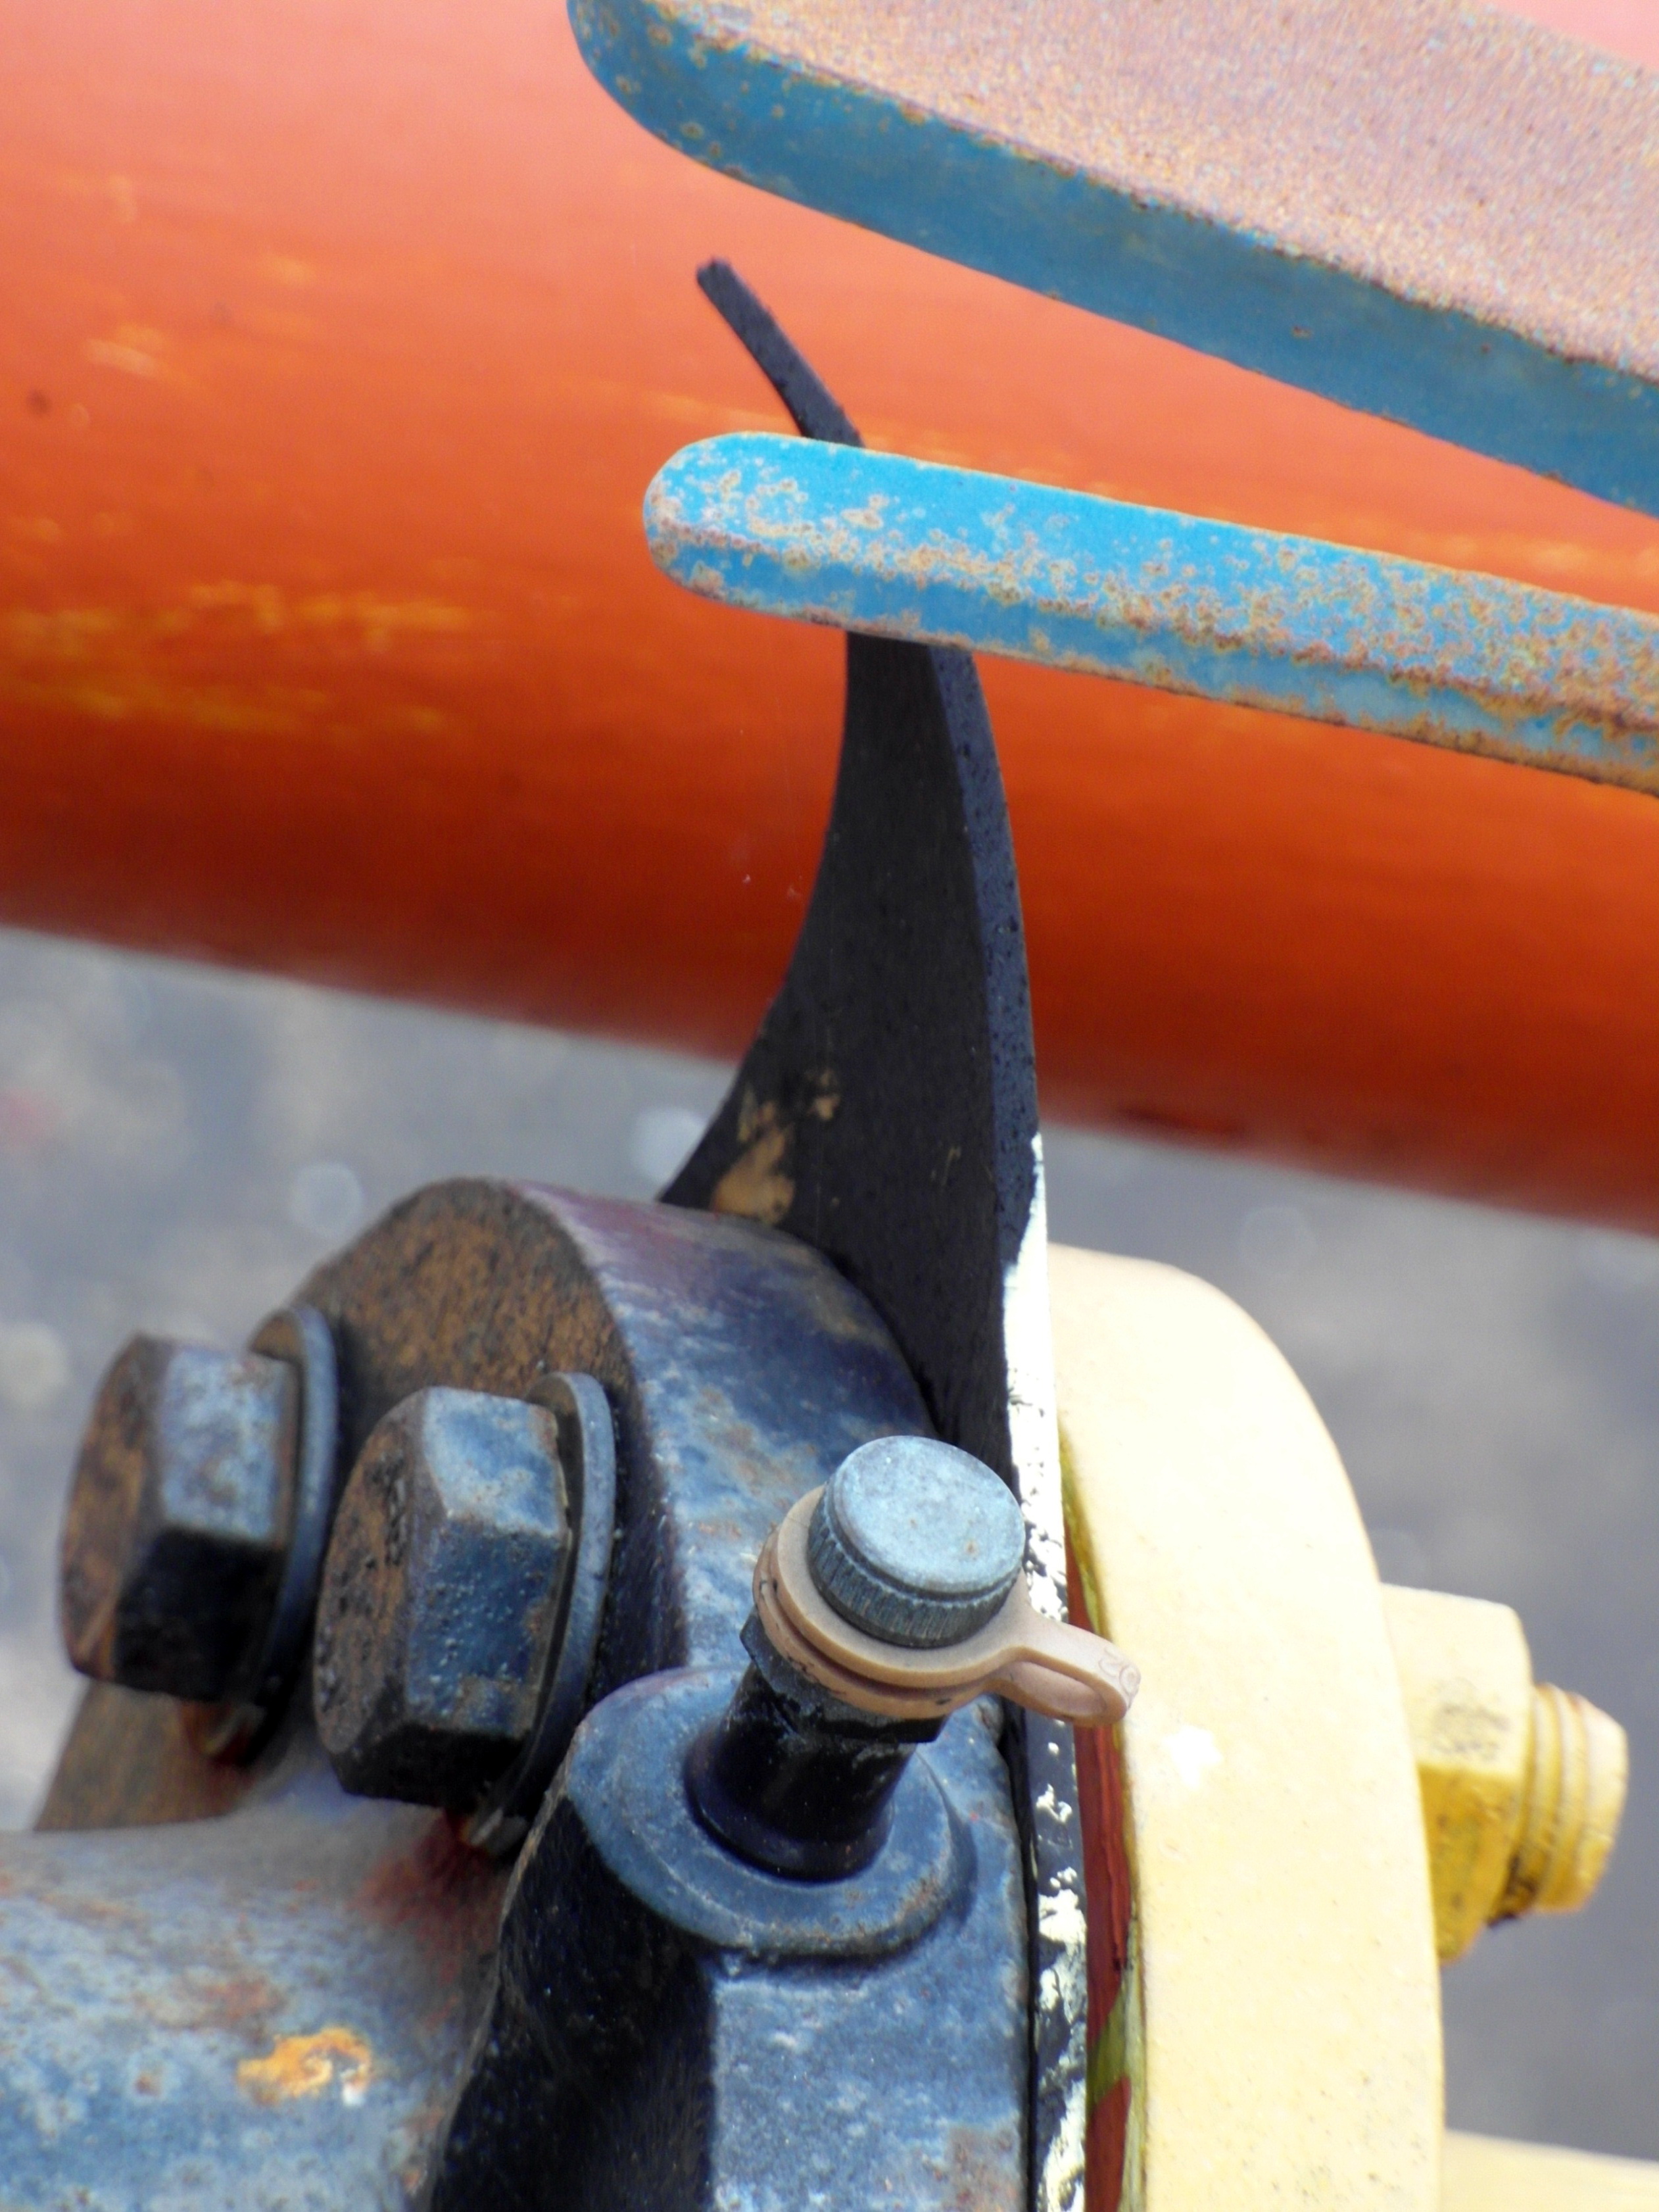 Pipeline close-up photo